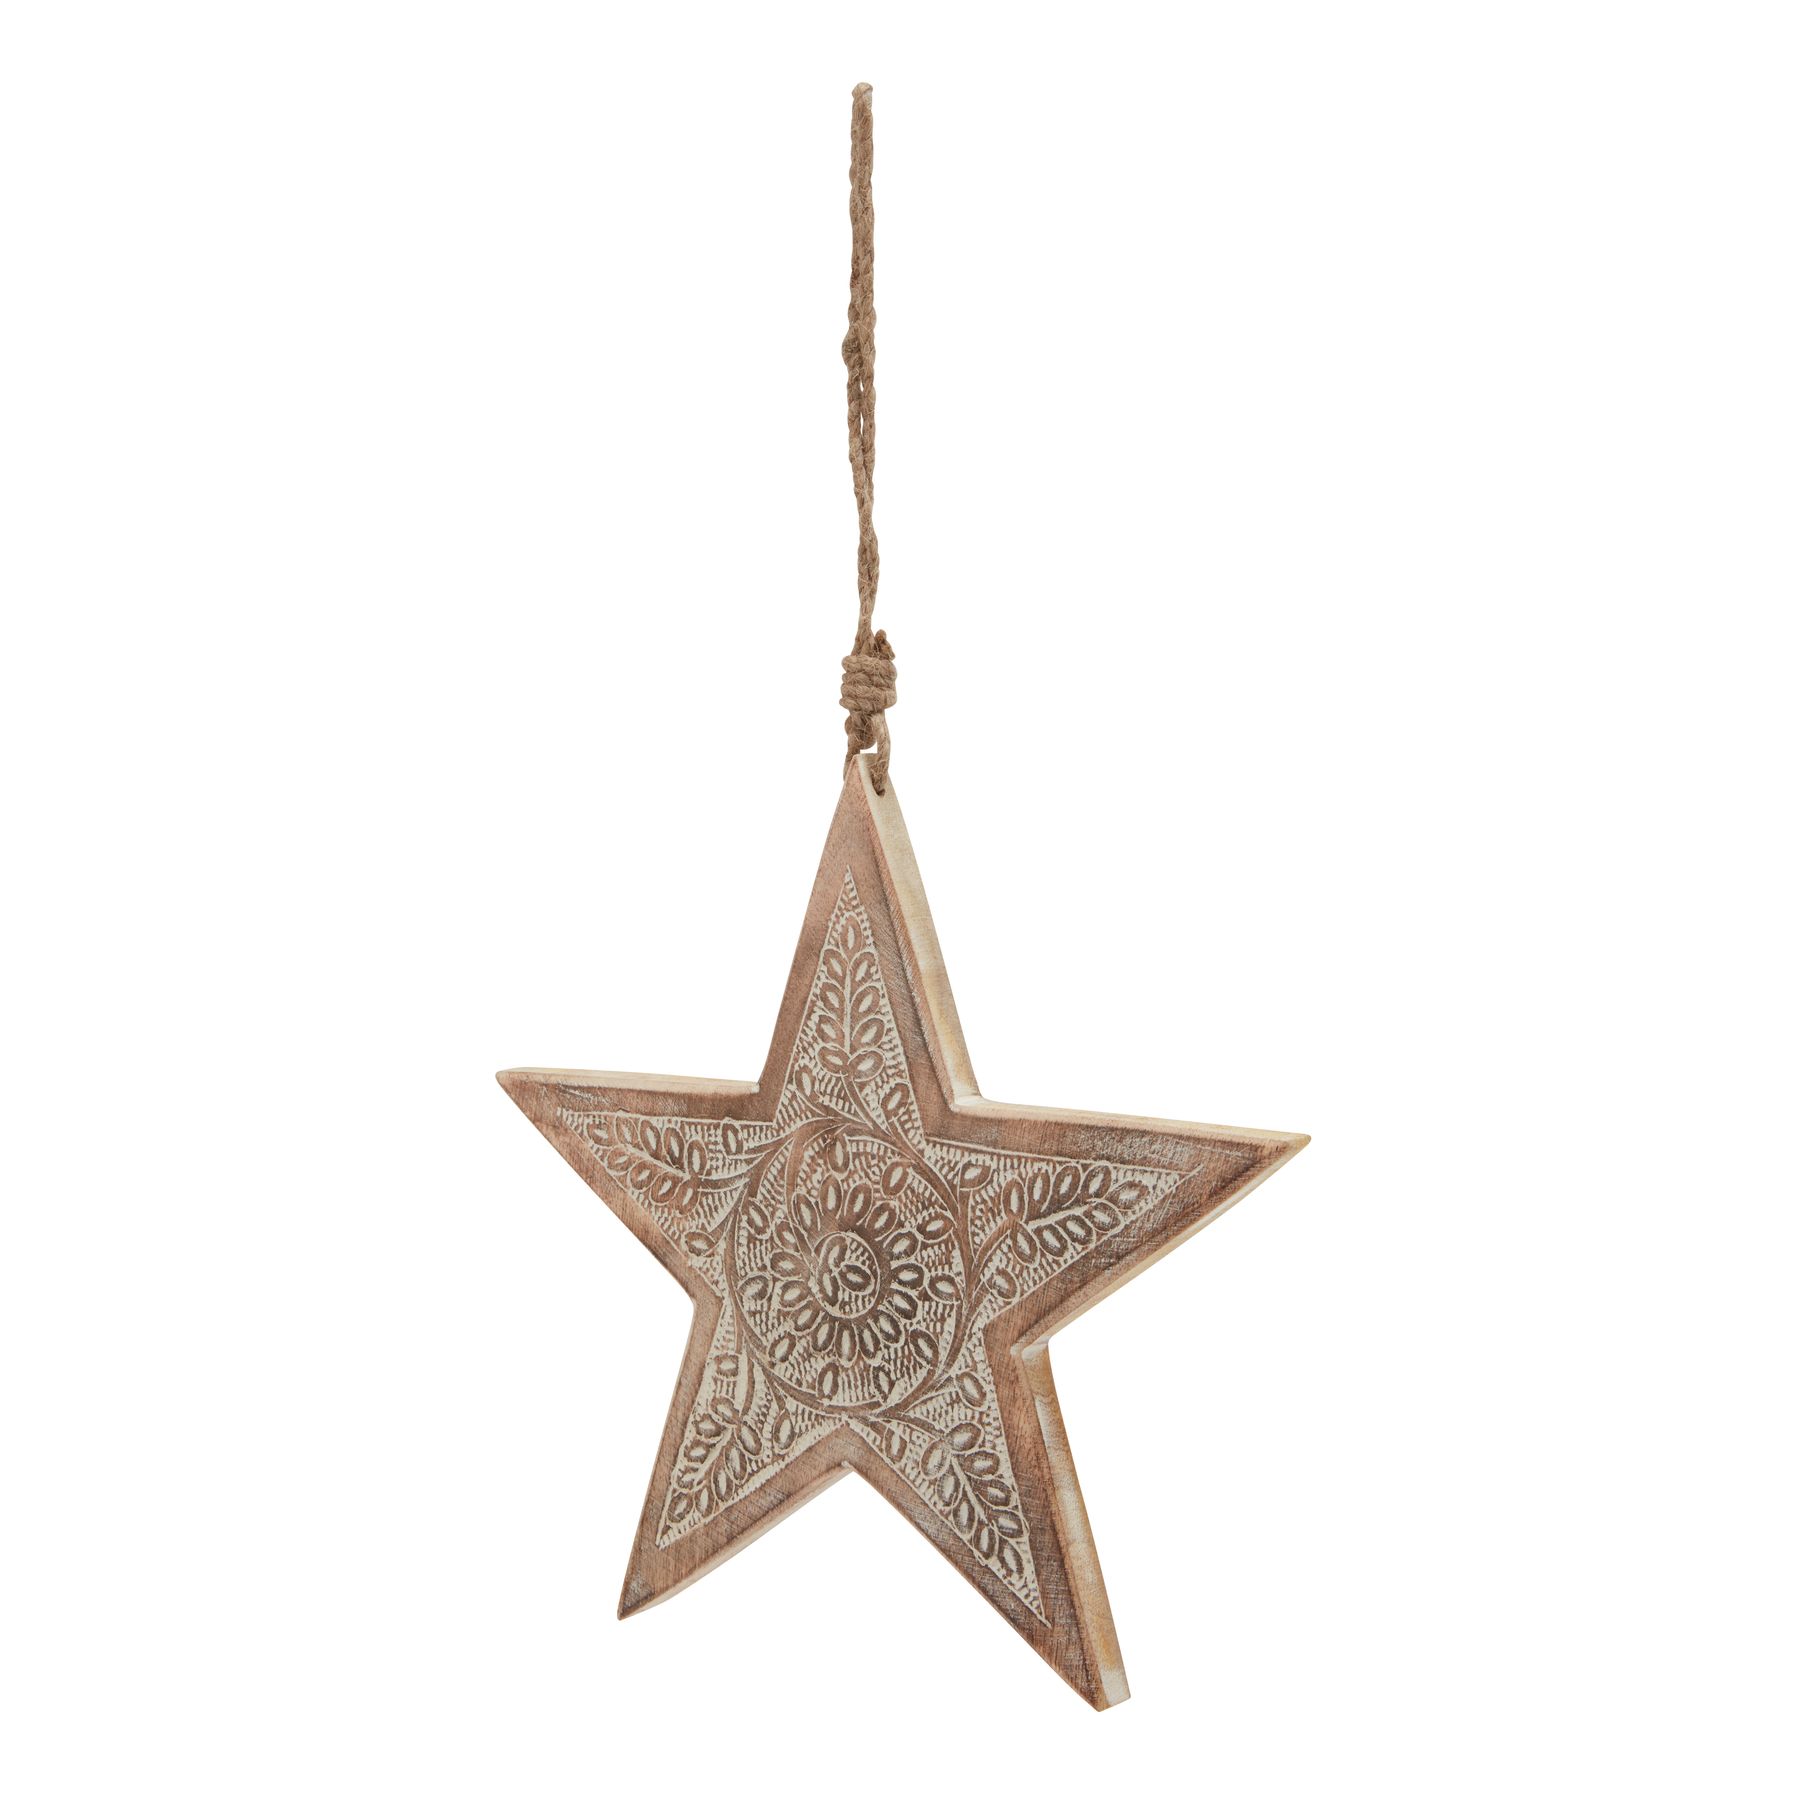 Natural Wooden Large Patterned Hanging Star - Image 1